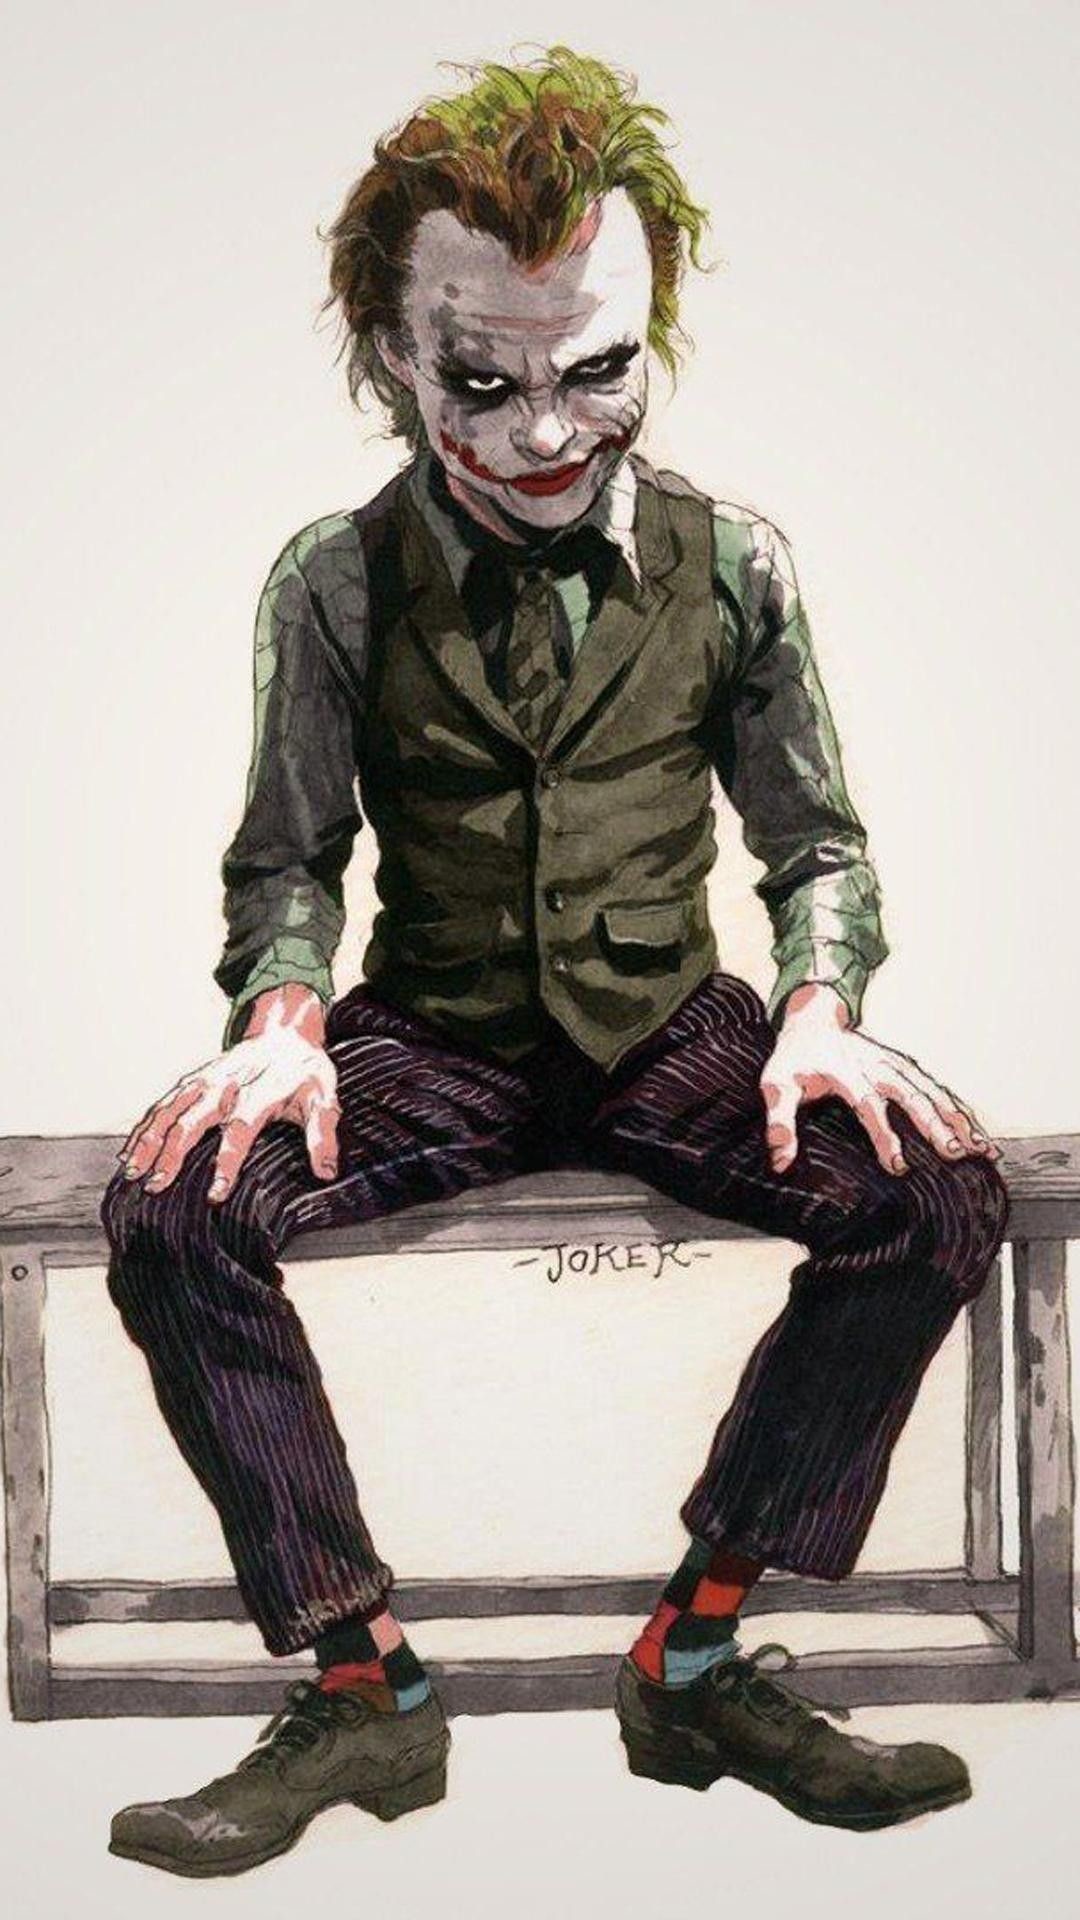 1080x1920 [][collection] Joker and Harley Quinn wallpaper